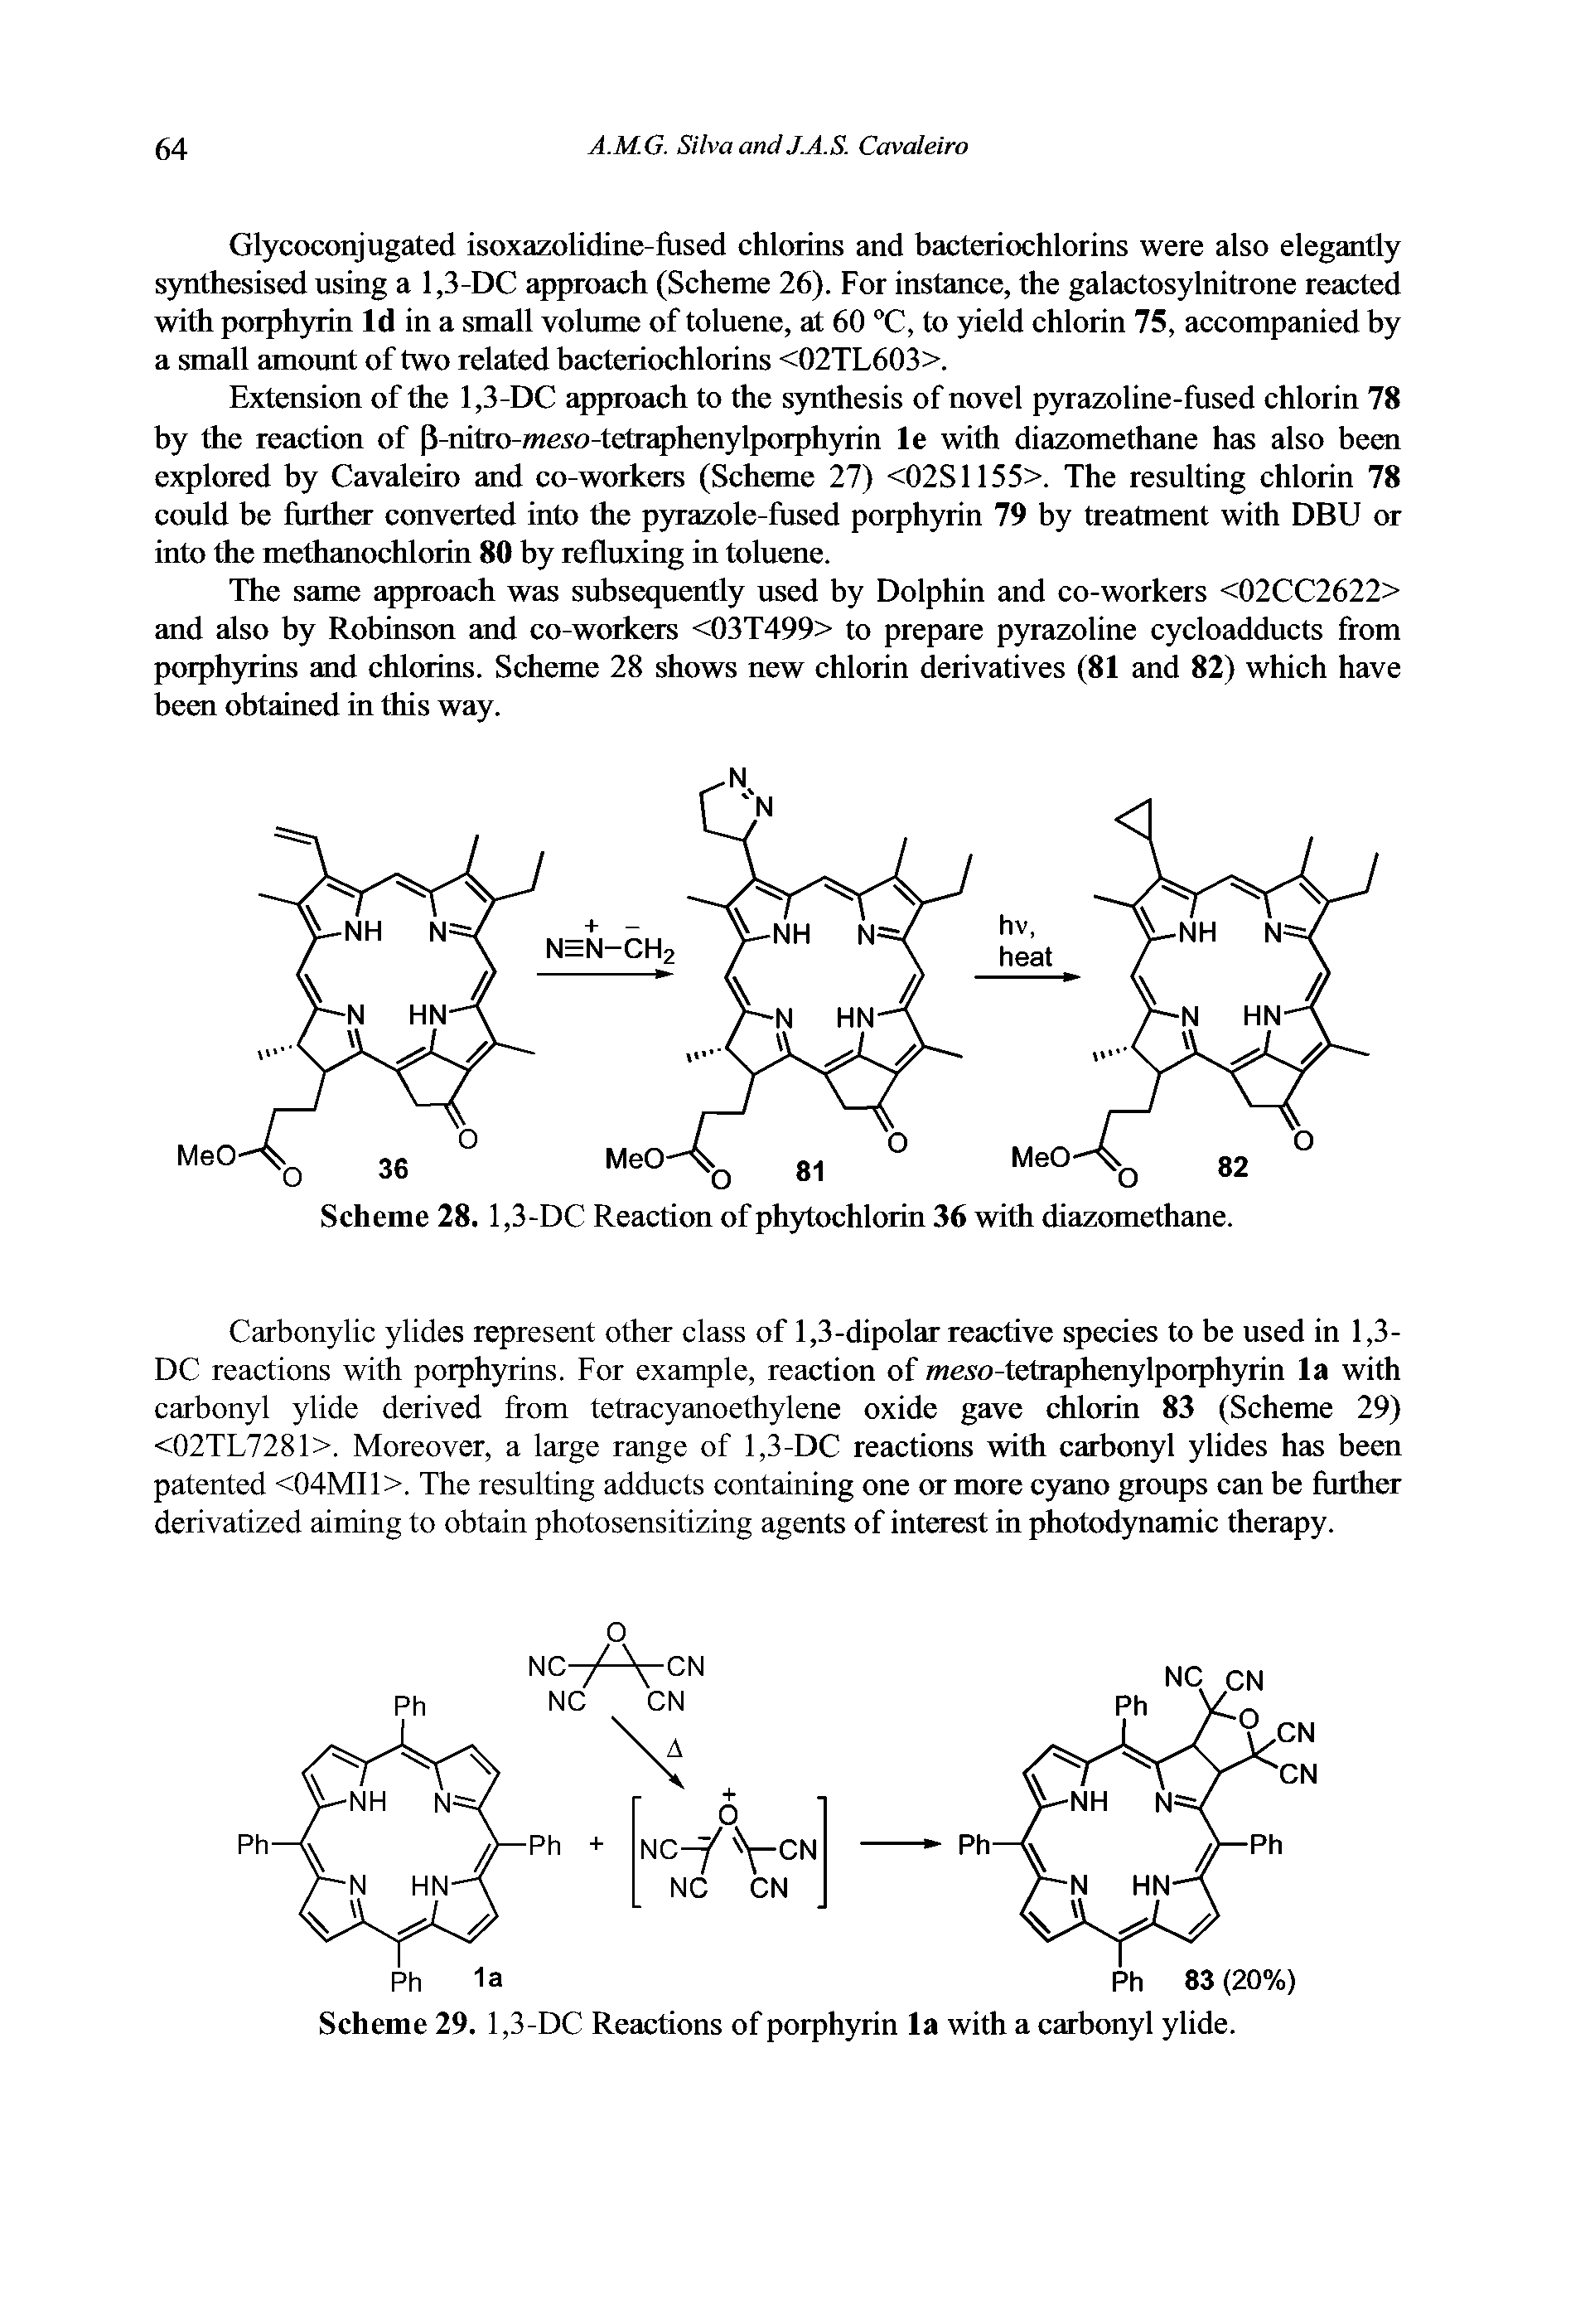 Scheme 29. 1,3-DC Reactions of porphyrin la with a carbonyl ylide.